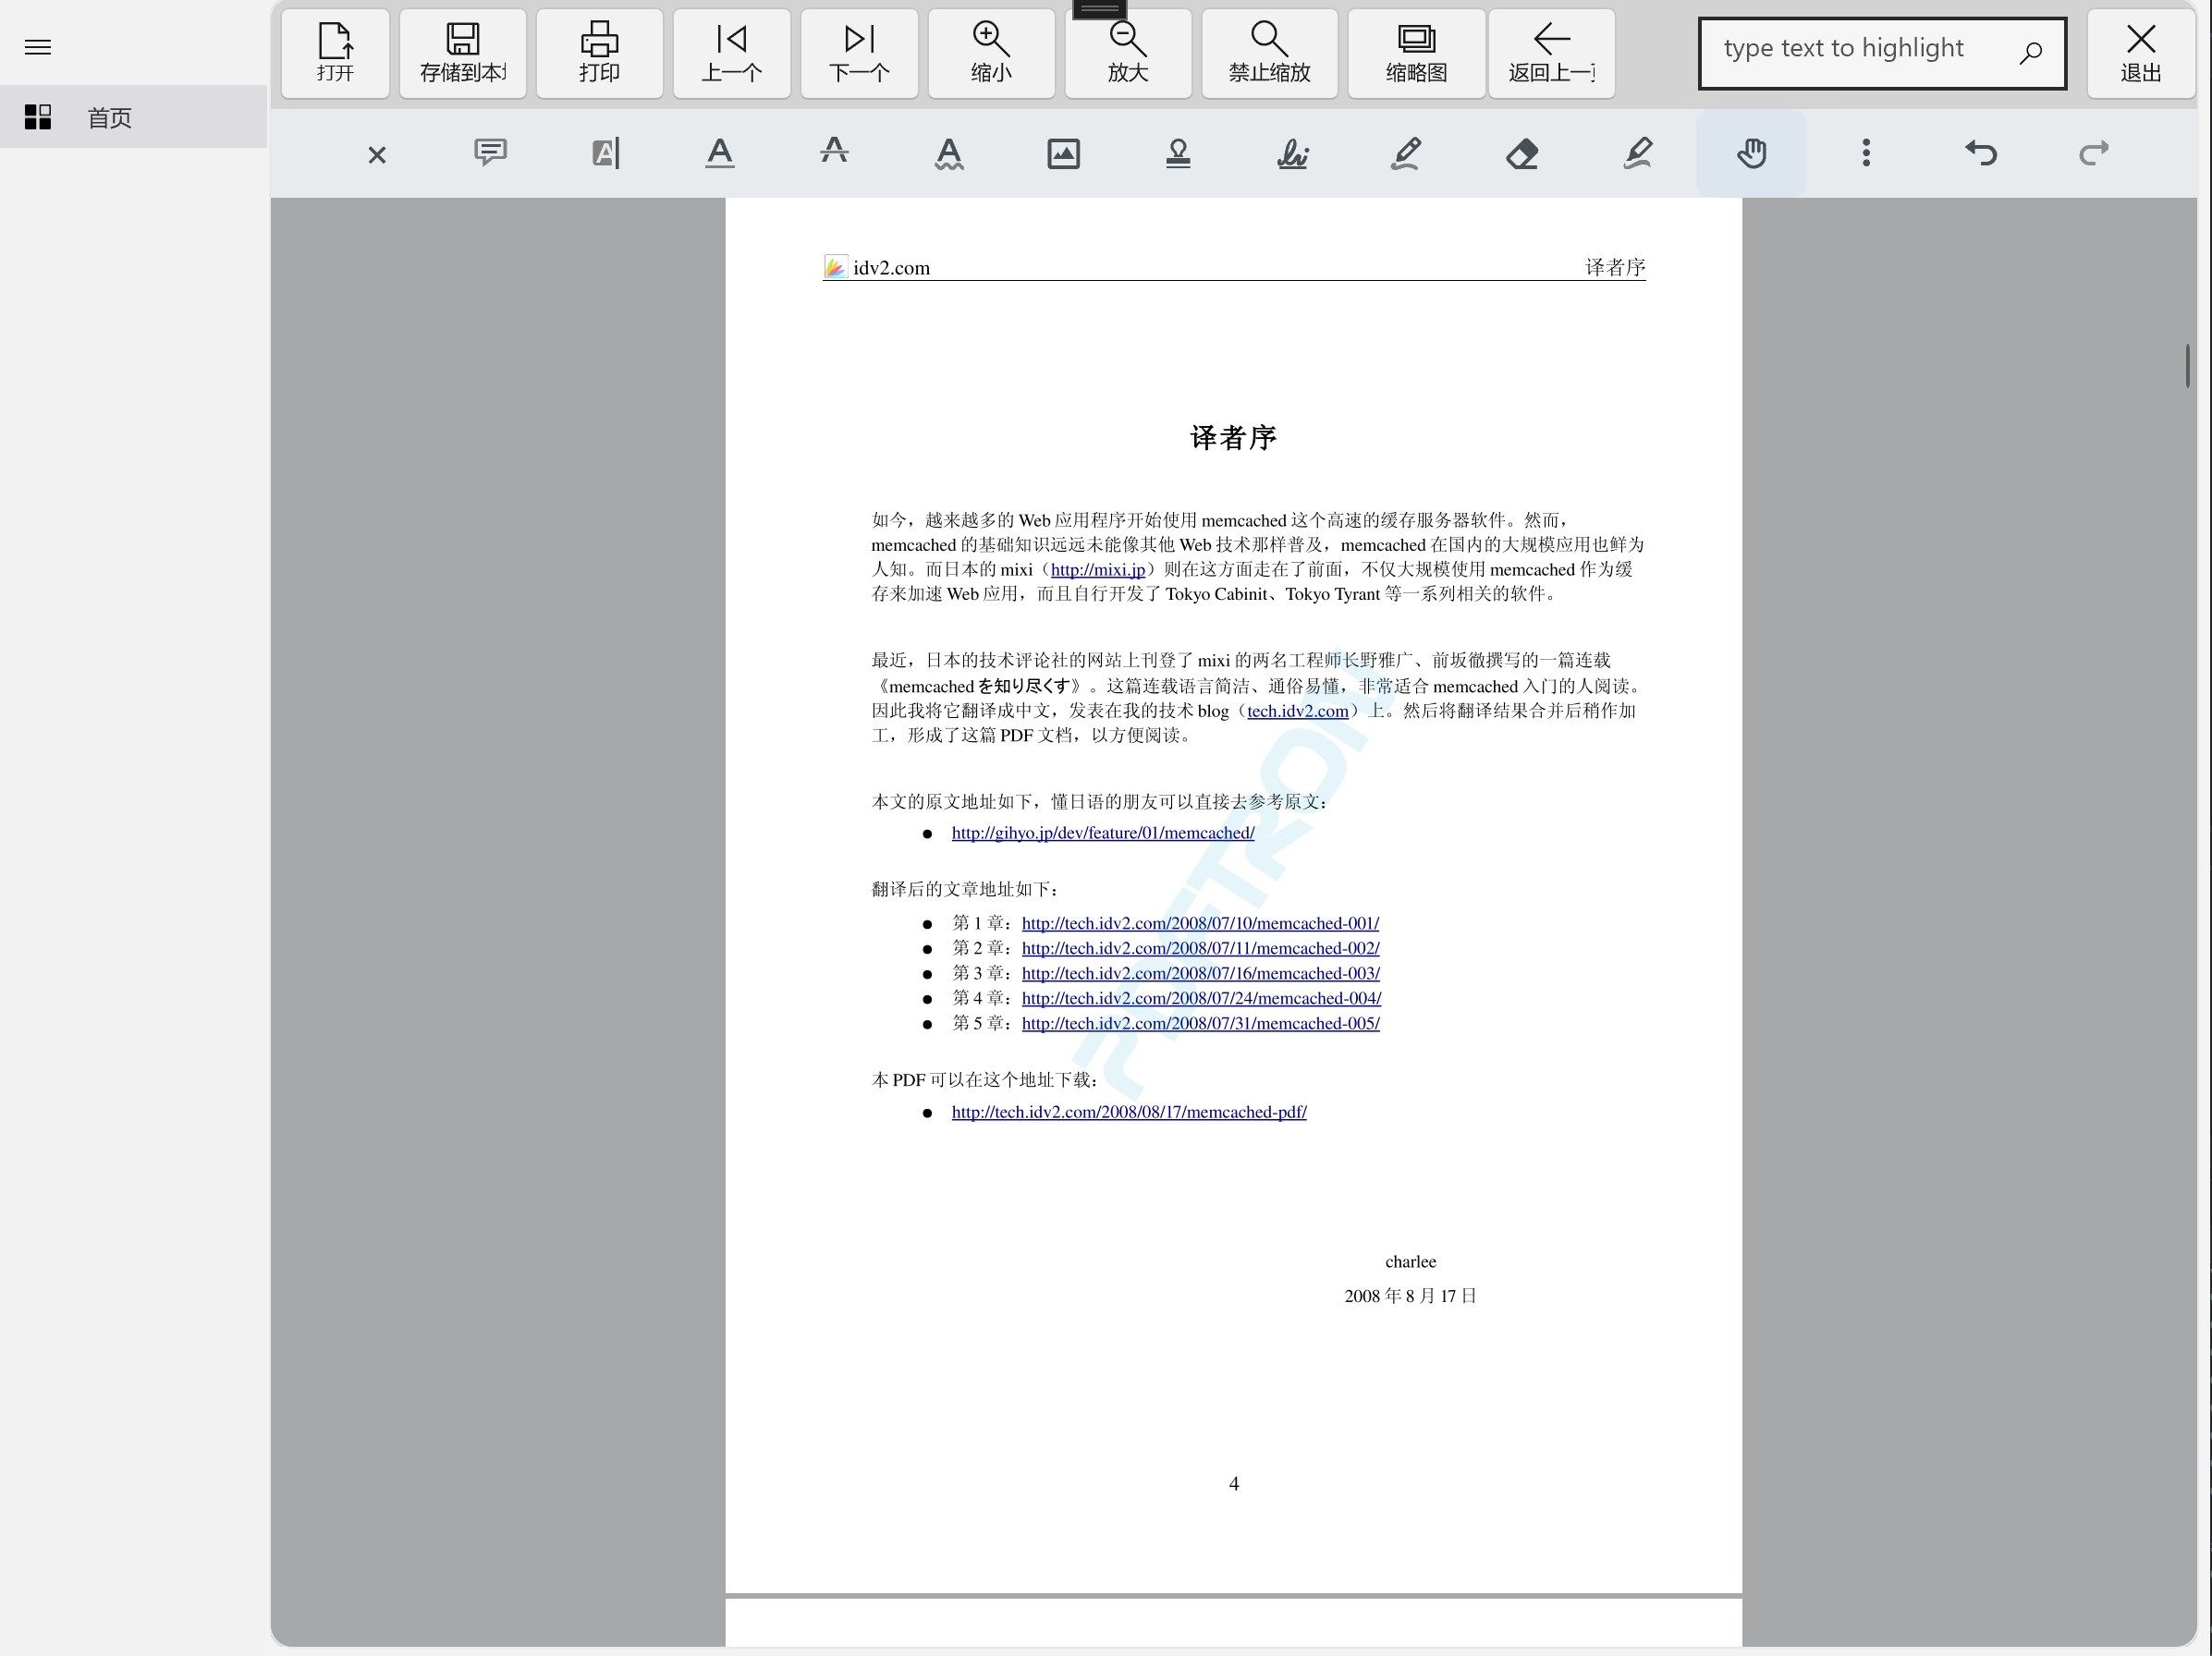 PDF Reader-Mark&View&Edit